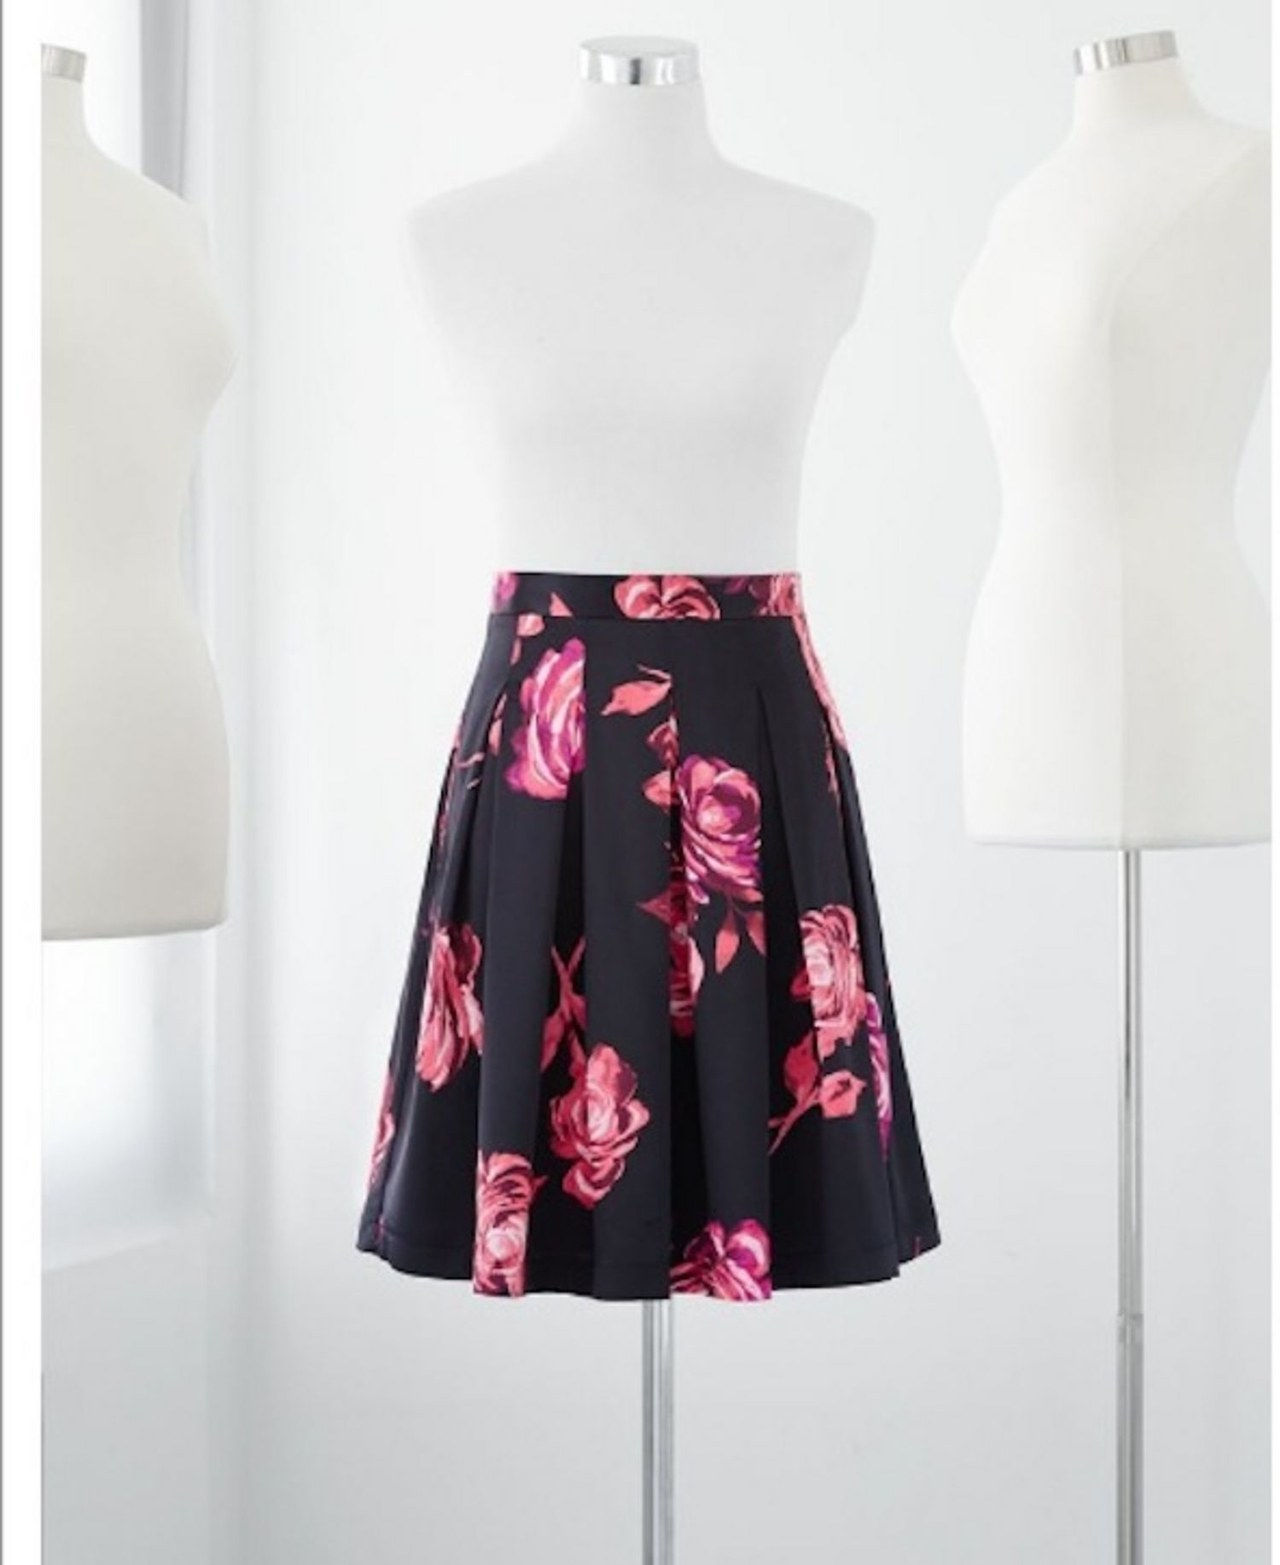 eva mendes new york and co floral skirt